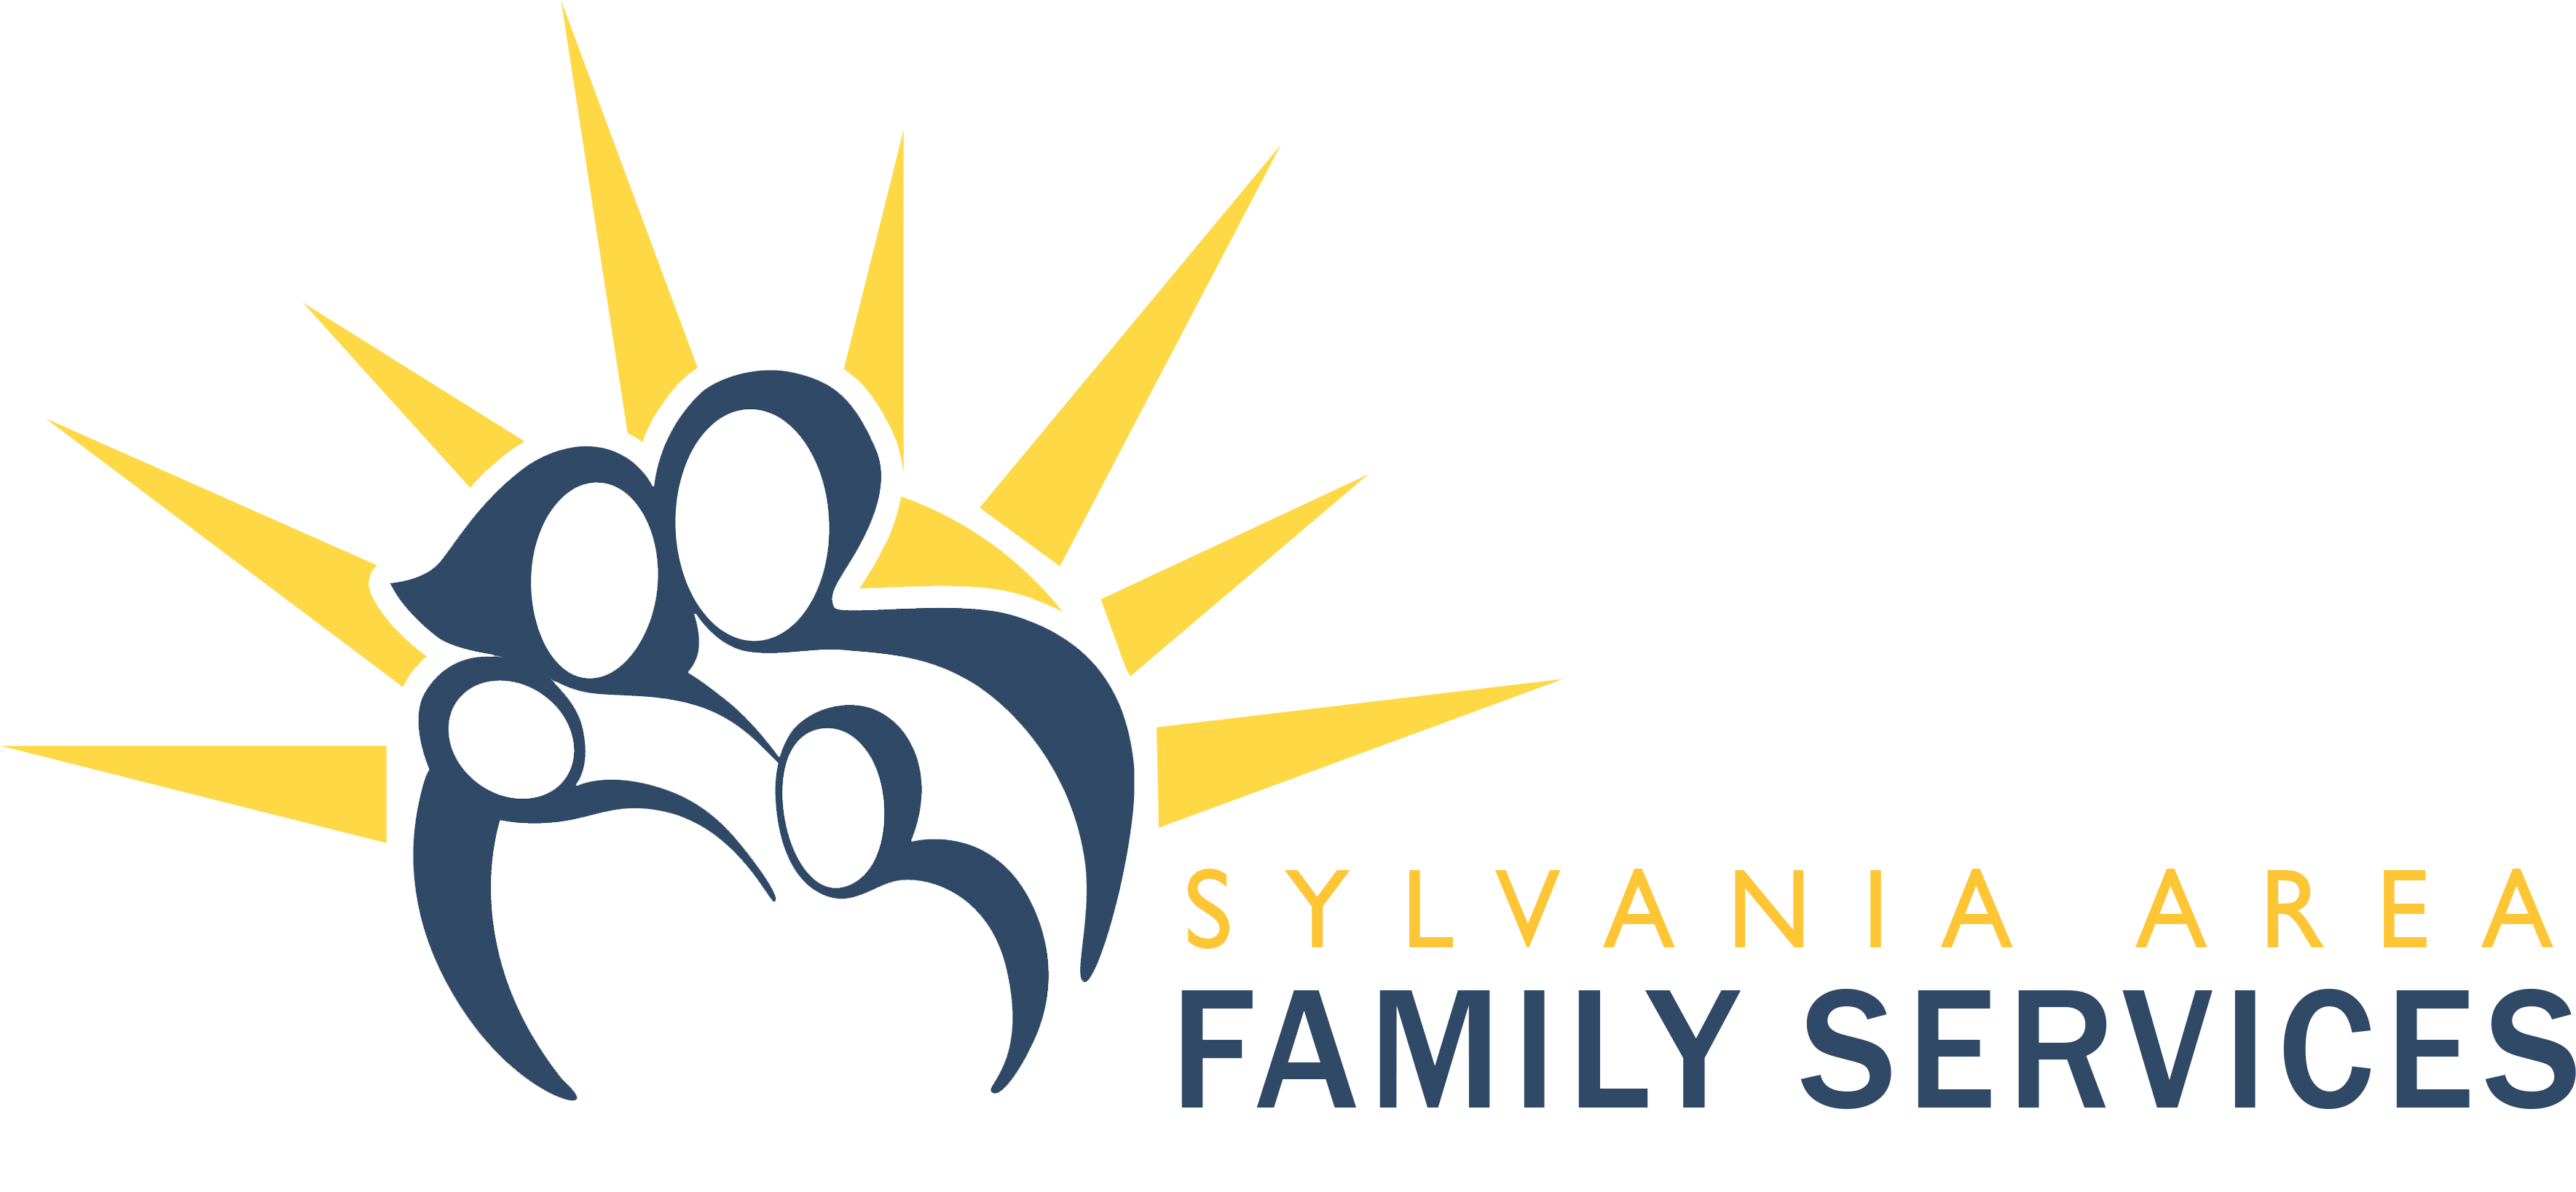 Sylvania Area Family Services, Inc - Sylvania Area Family Services (3685x1650), Png Download